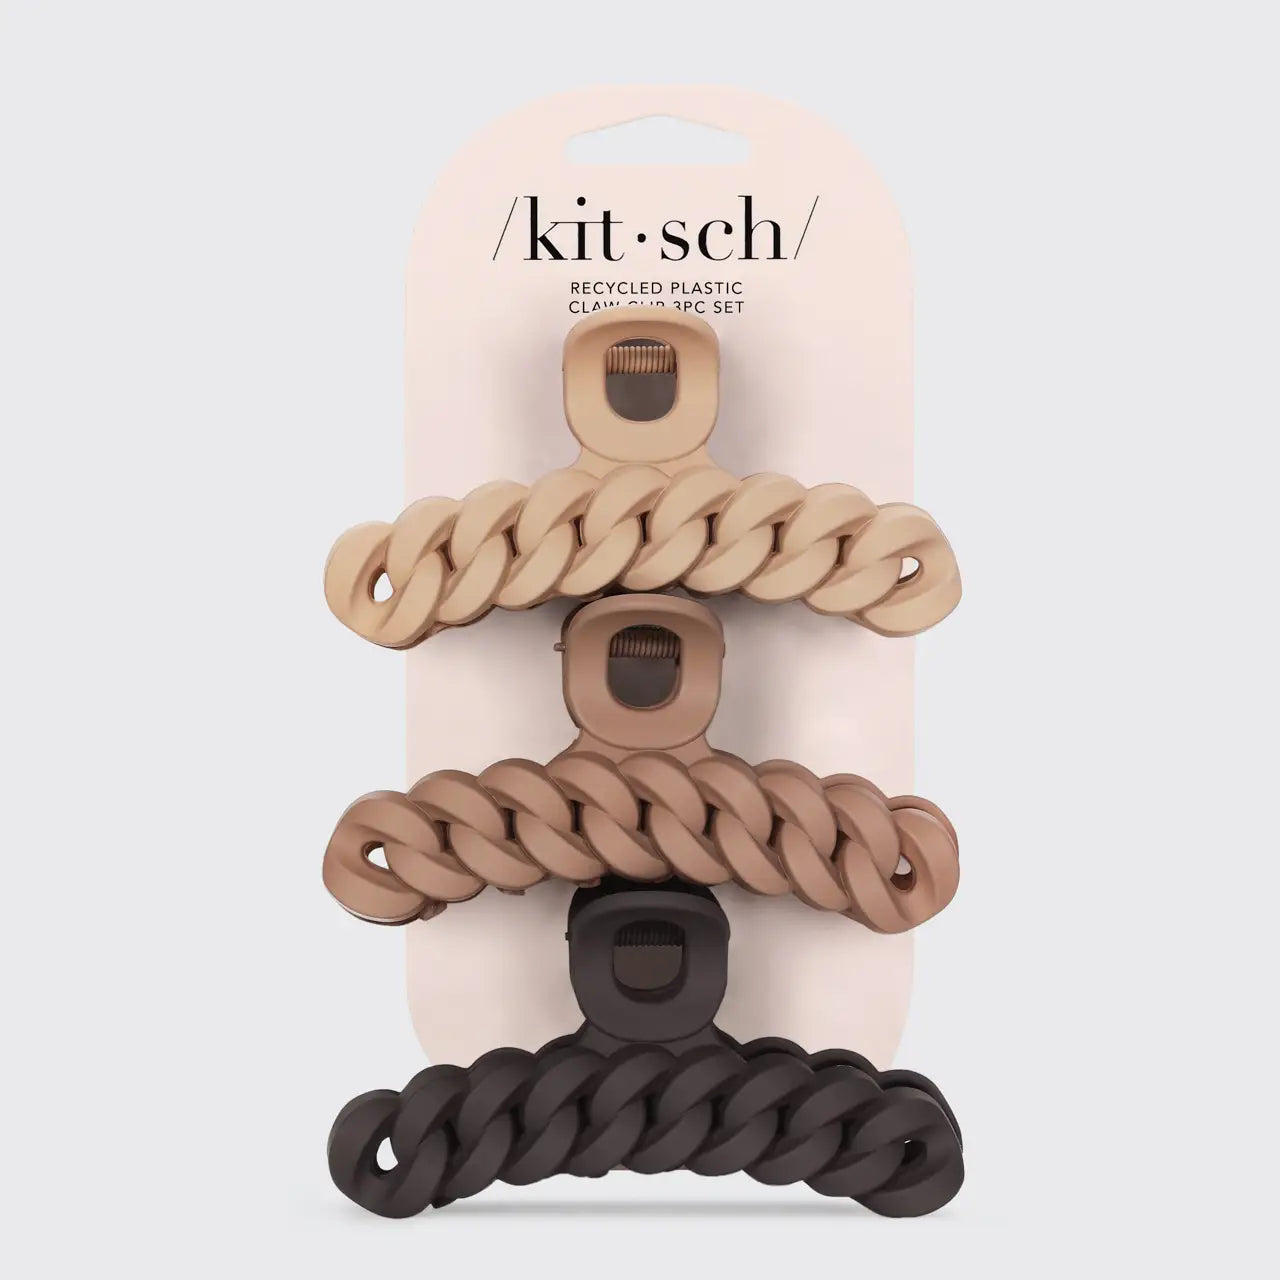 KITSCH - Eco-friendly Chain Claw Clip 3pc Set